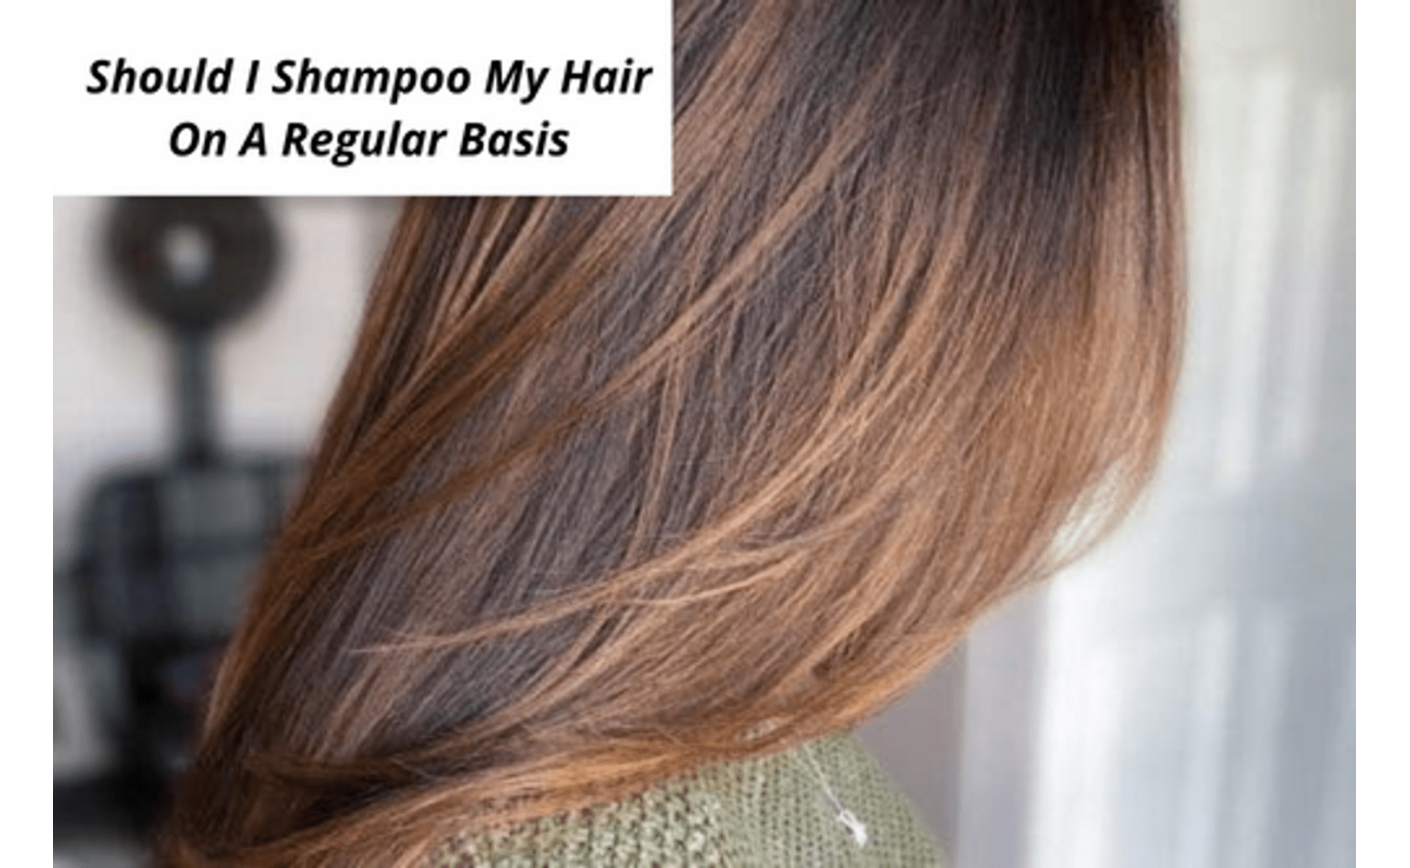 Should I Shampoo My Hair On A Regular Basis?